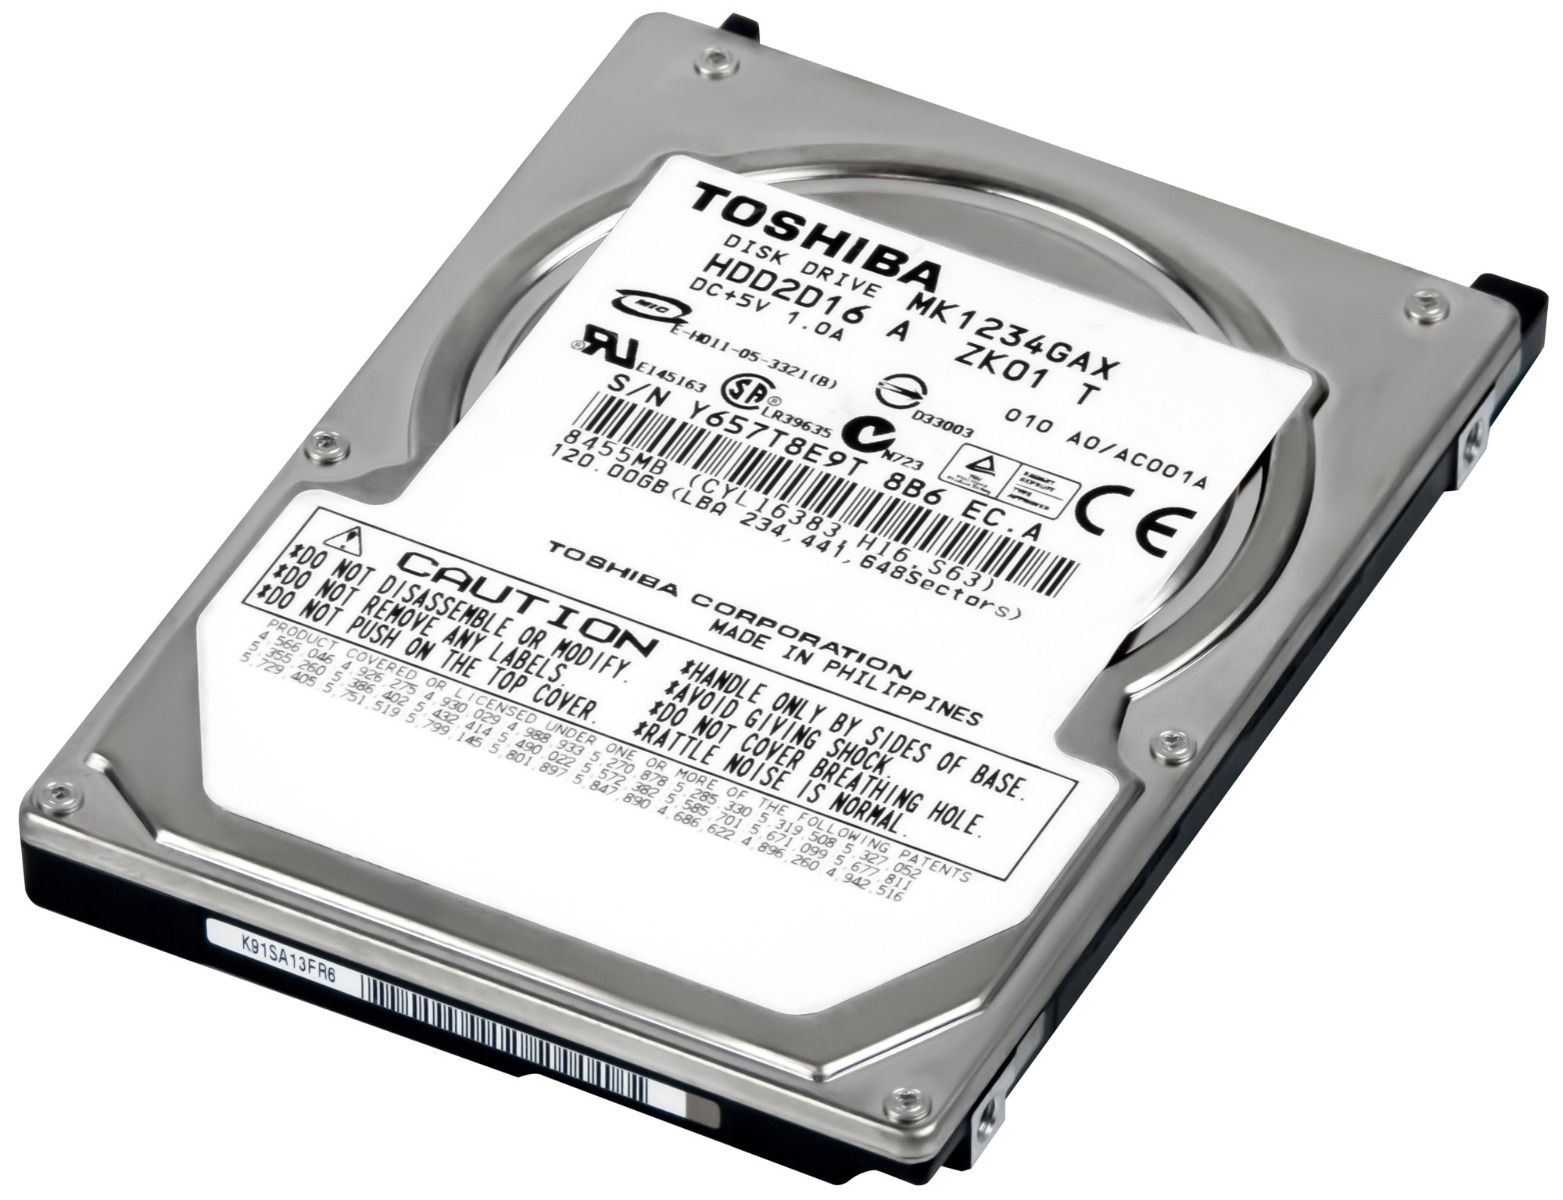 TOSHIBA 120GB 5.4K 8MB ATA 2.5'' MK1234GAX